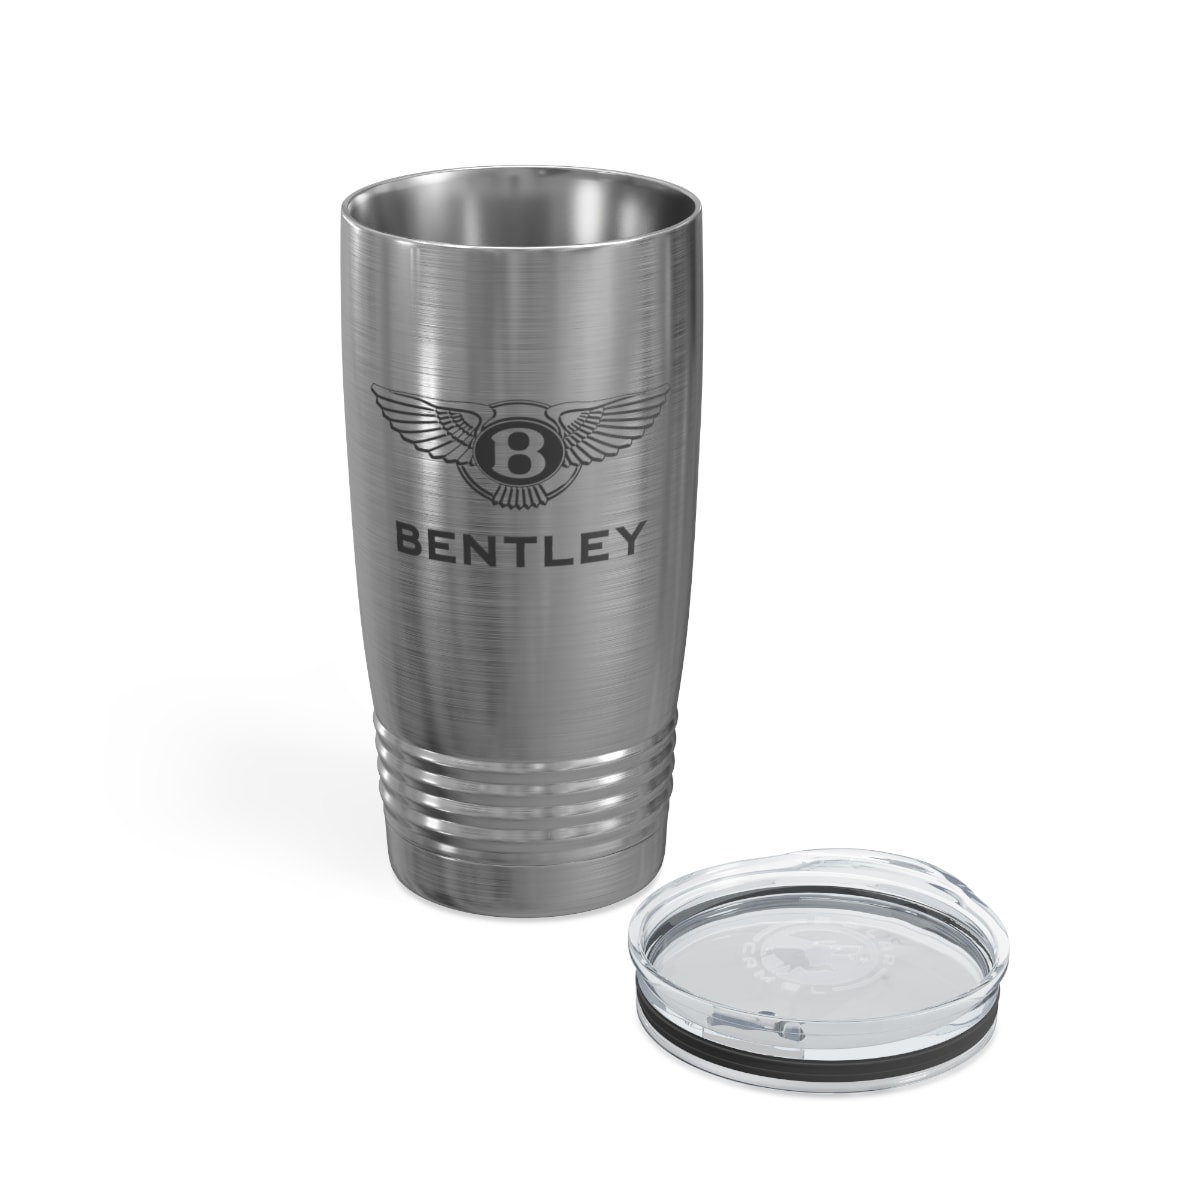 https://www.merchhunters.com/wp-content/uploads/2022/11/bentley-logo-20oz-tumbler-mug-2.jpg